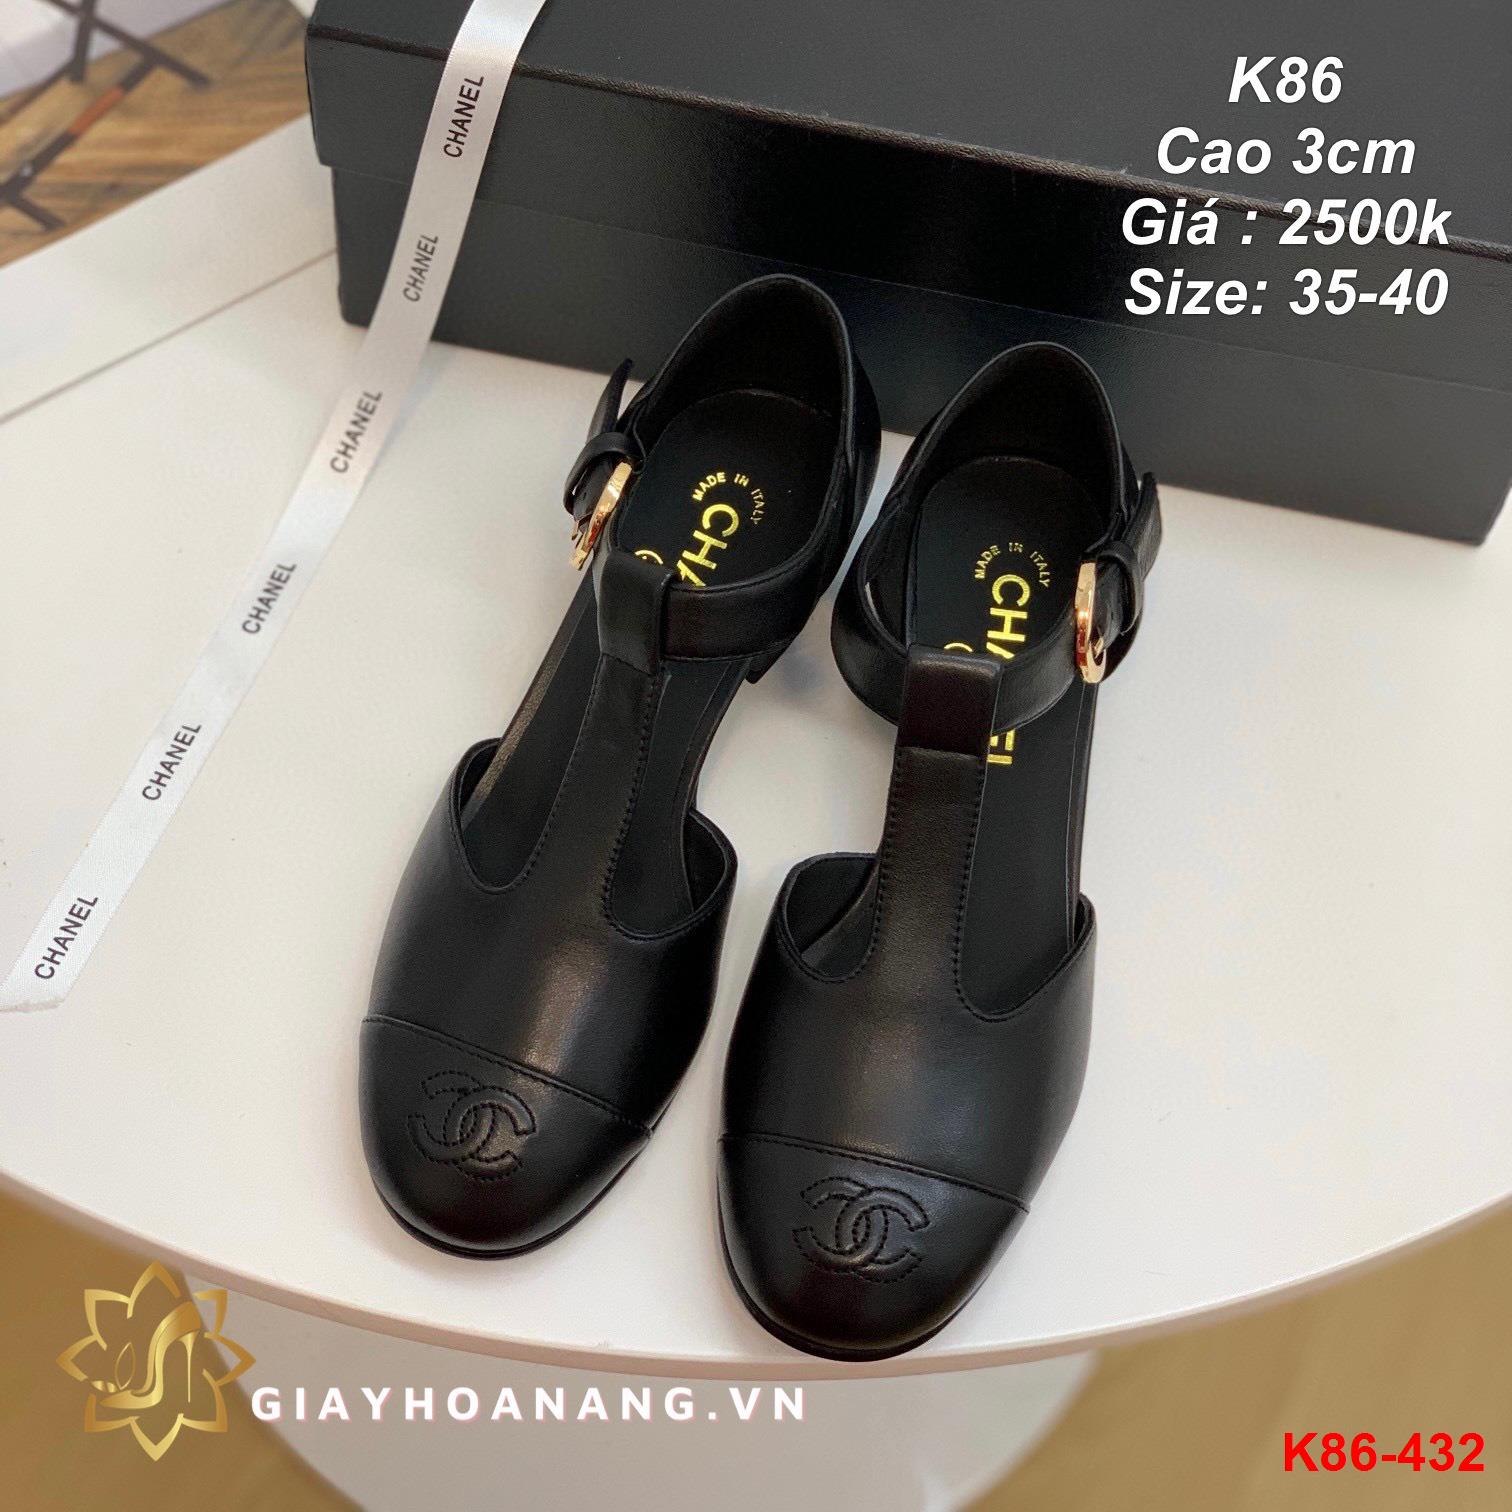 K86-432 Chanel sandal cao 3cm siêu cấp